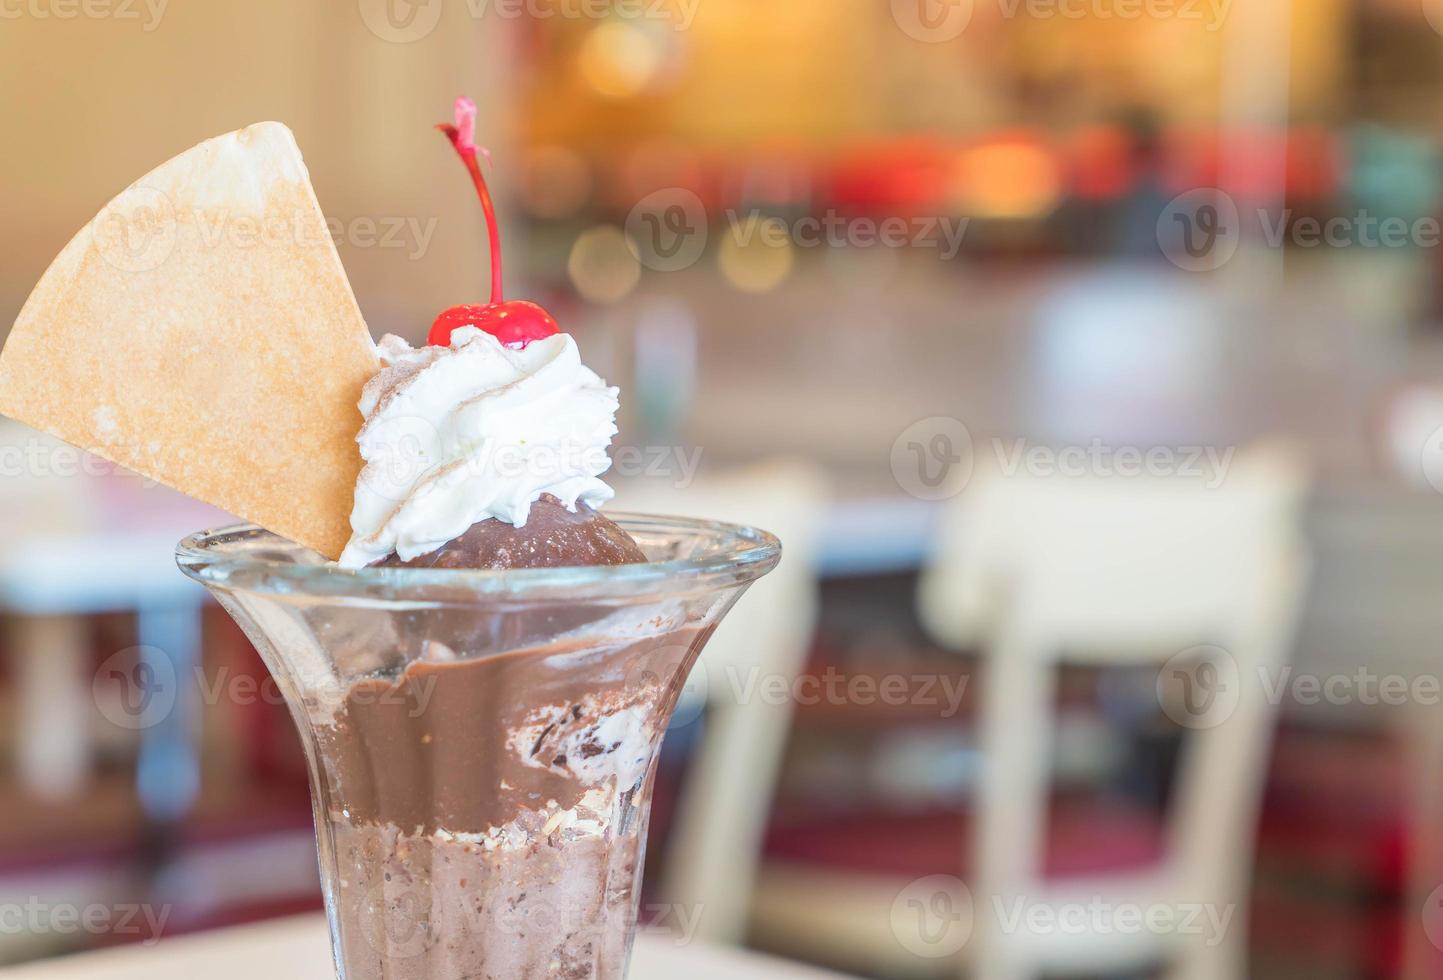 chocoladeijscoupe-ijs in café foto